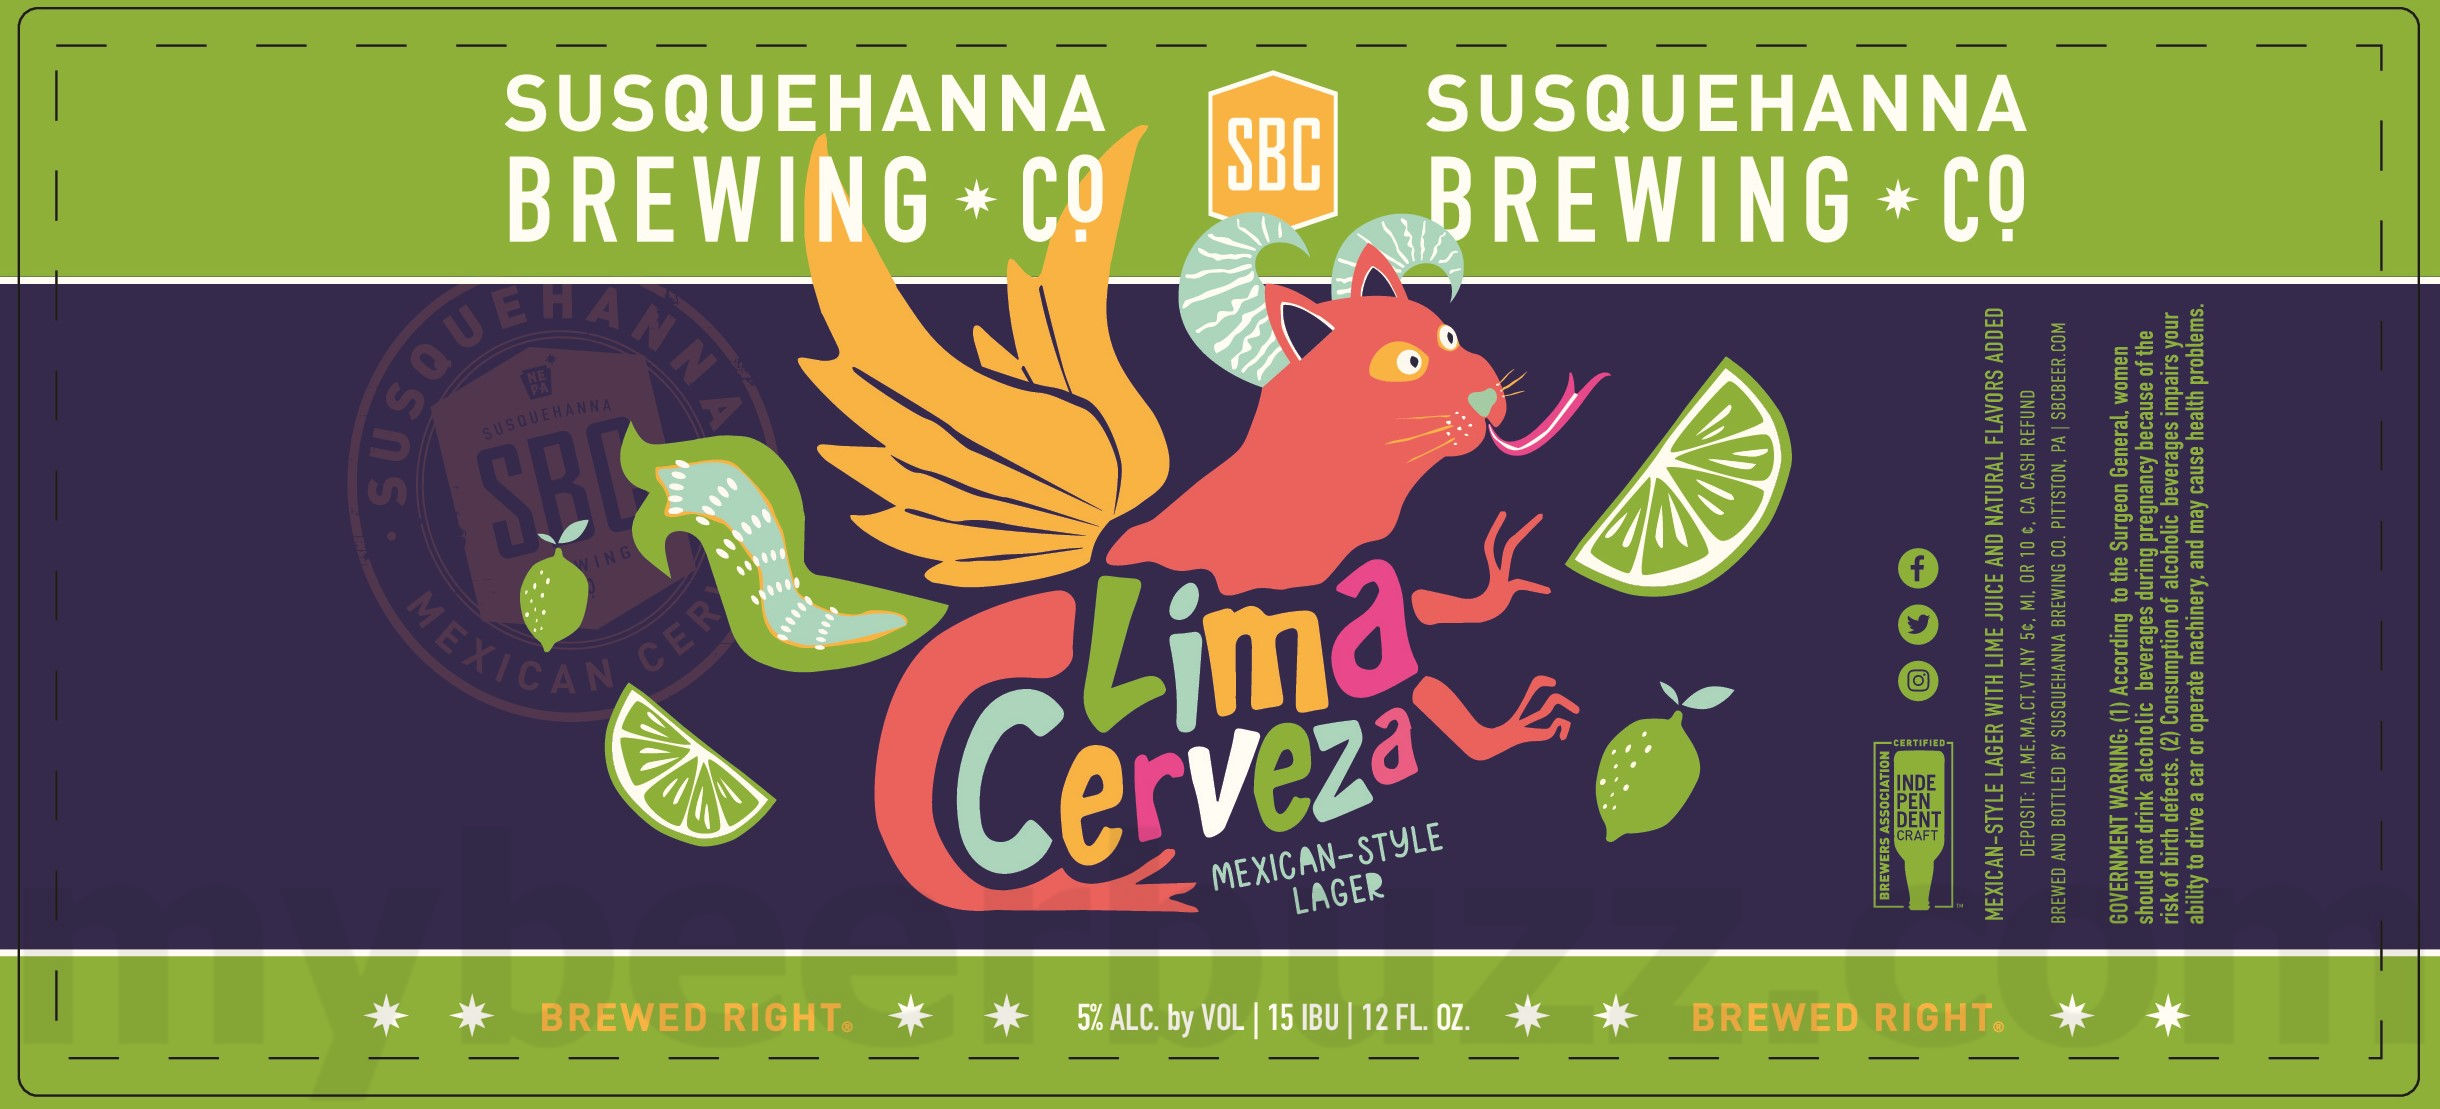 Susquehanna Brewing Working On Lima Cerveza